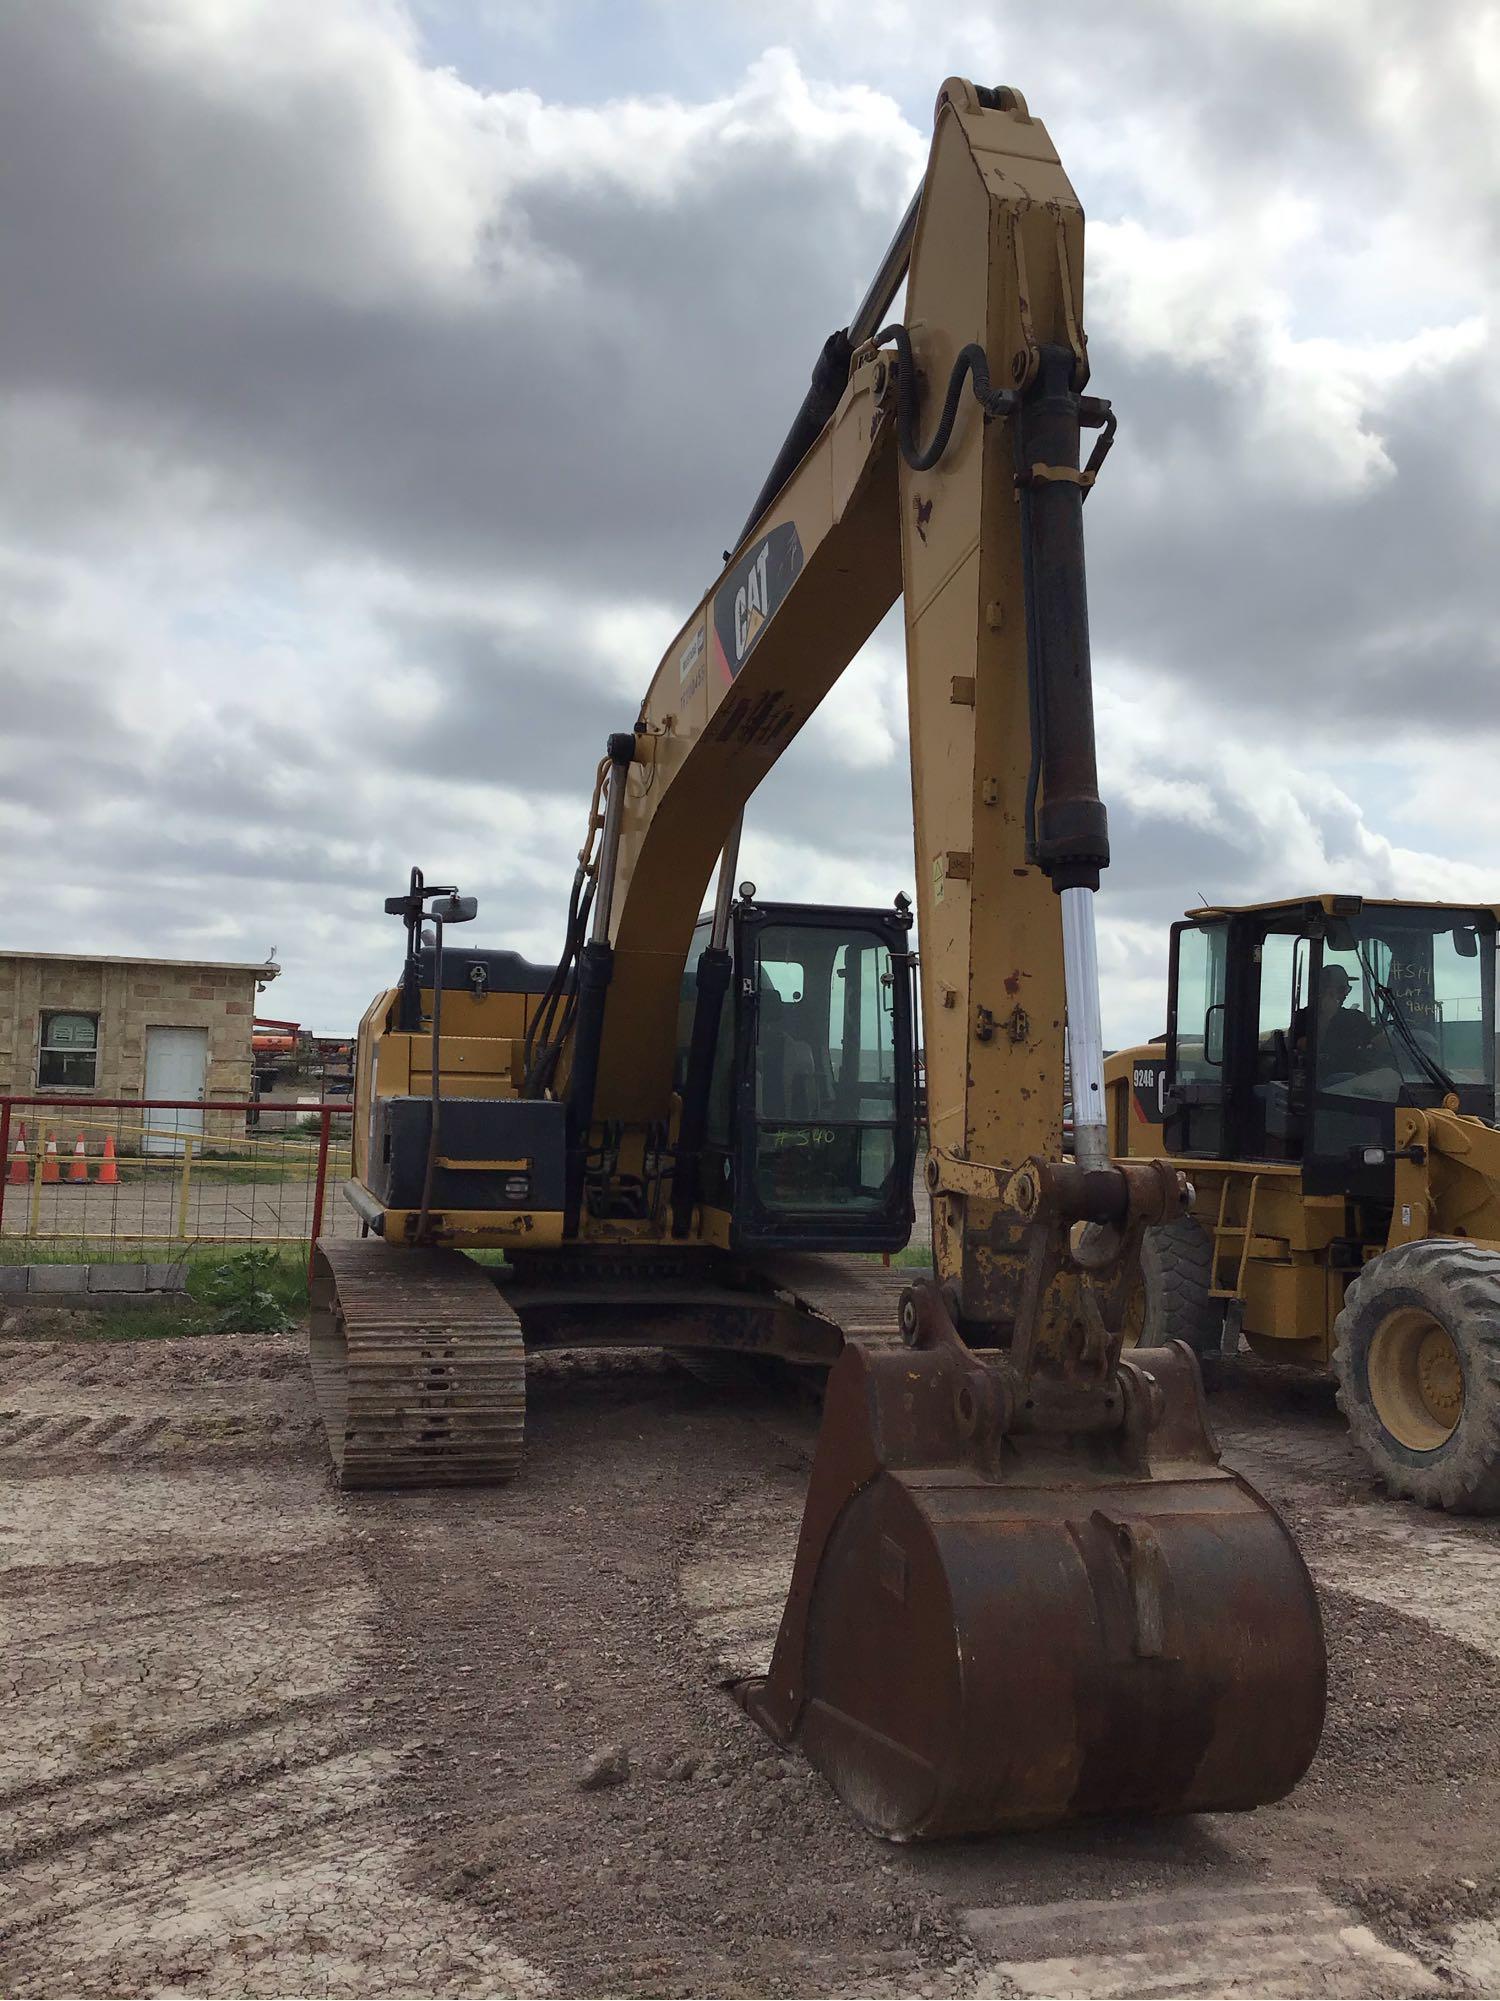 320 E LRR Caterpillar Excavator, Srl# TFX00455